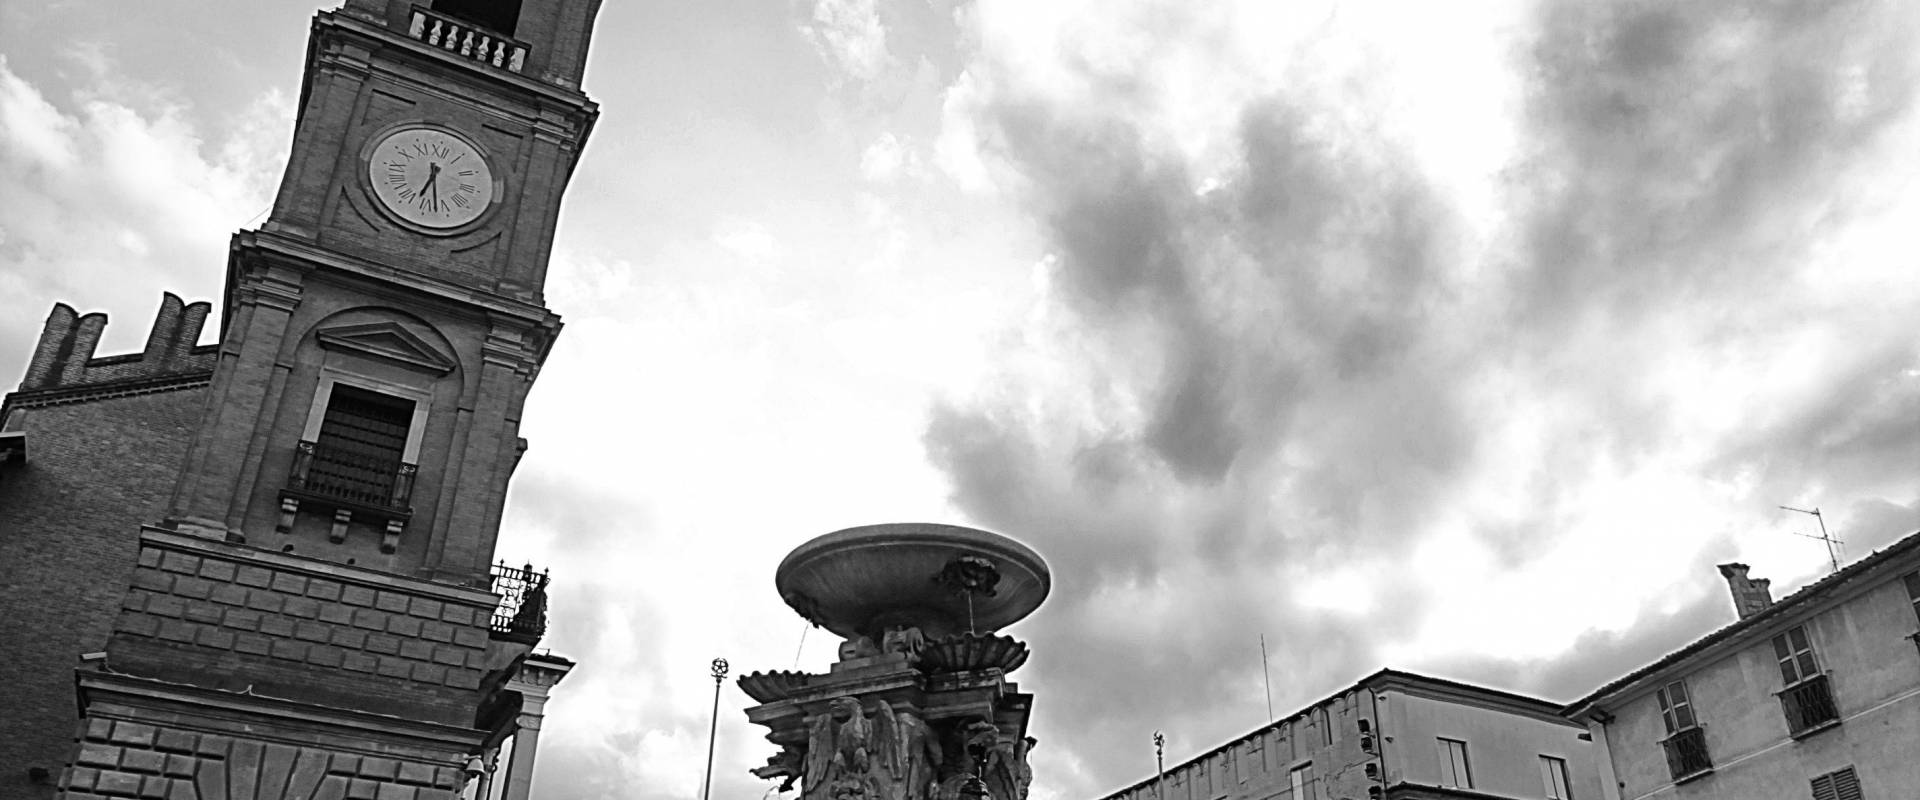 La torre e la fontana photo by Frenky65